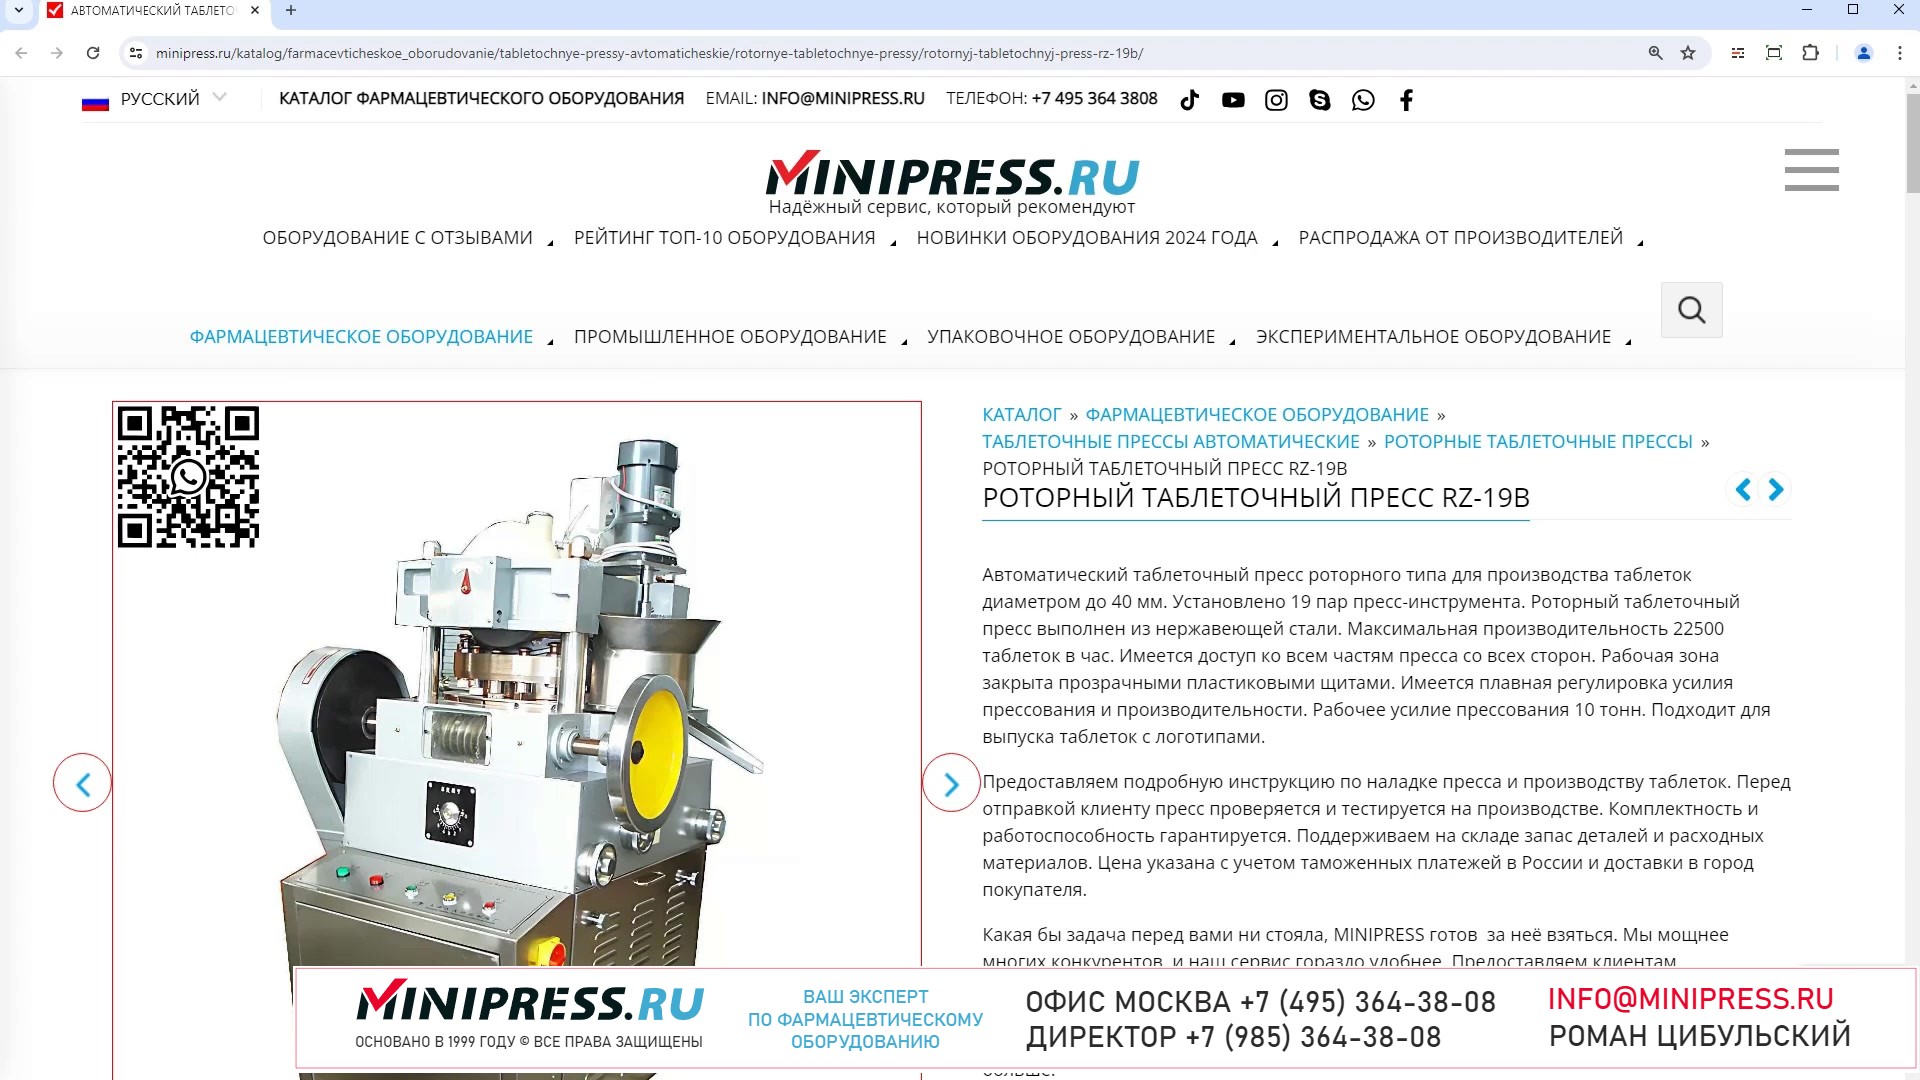 Minipress.ru Роторный таблеточный пресс RZ-19B